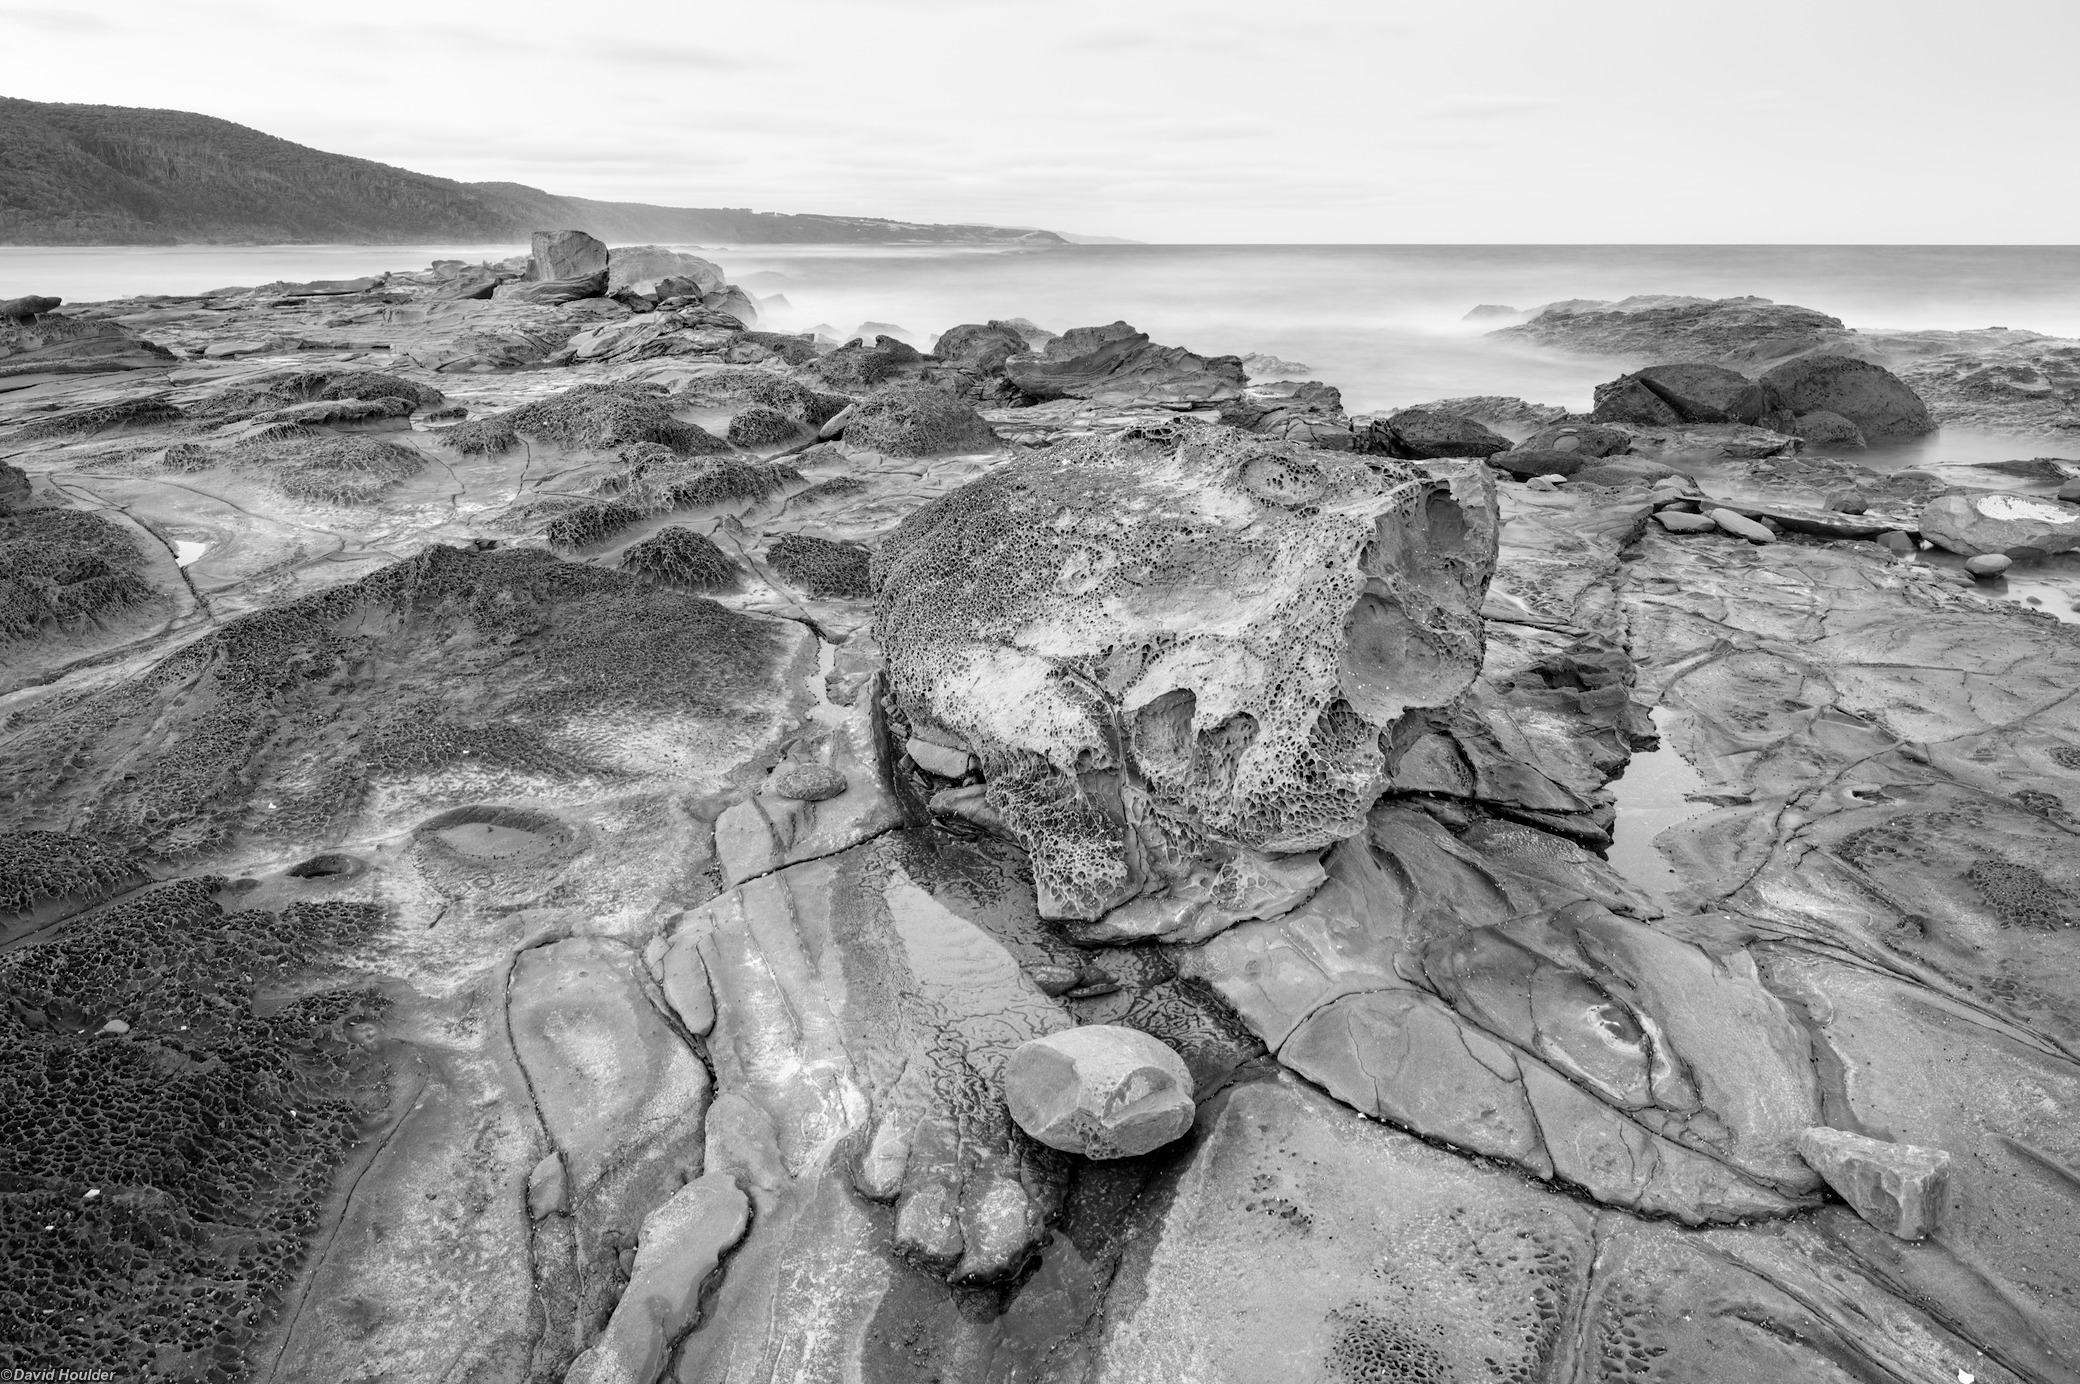 Eroded rocks on a rock shelf by the sea